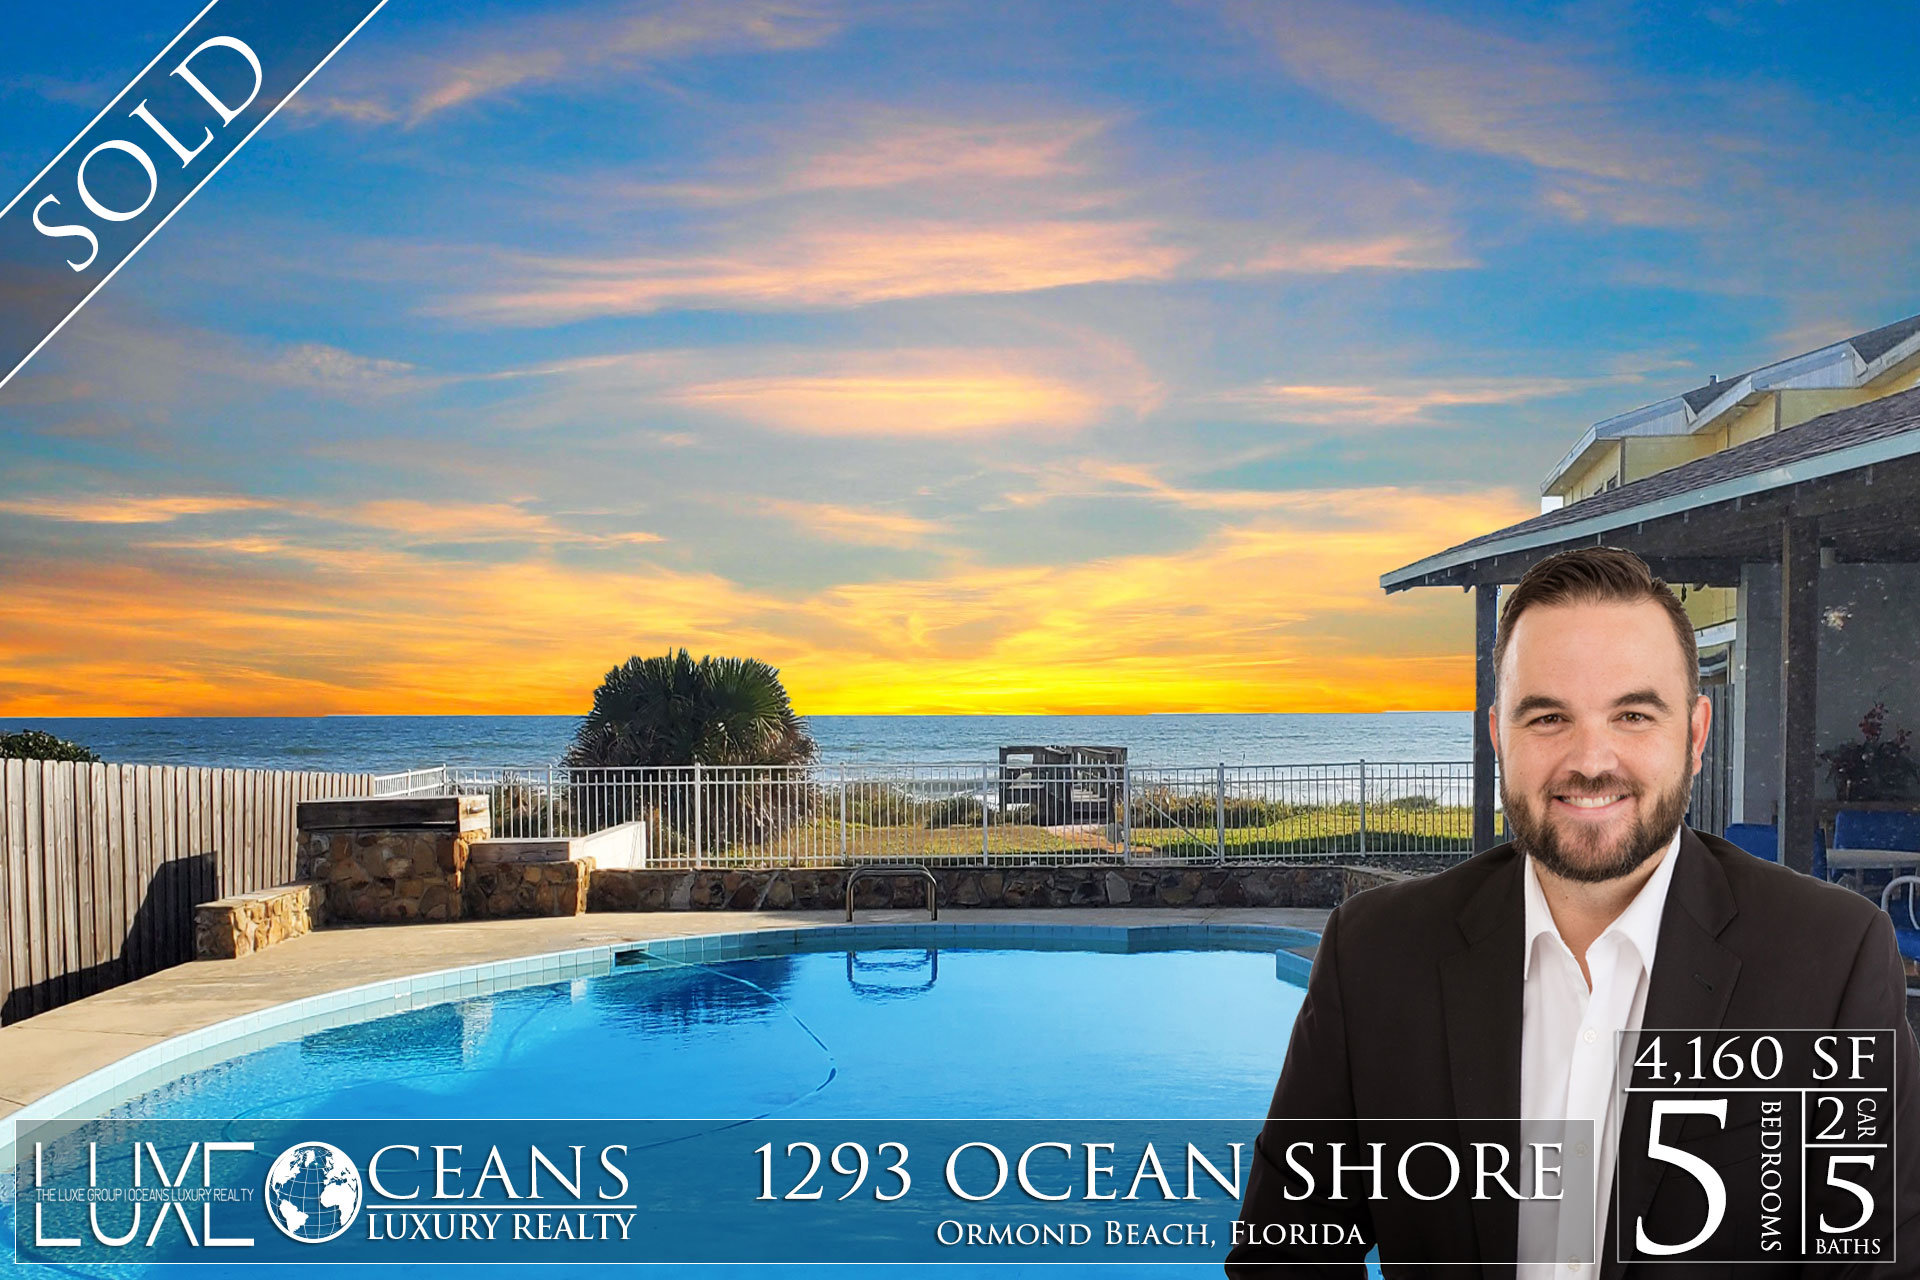 Ormond Beach oceanfront homes for sale. 1293 S Ocean Shore Blvd Ormond Beach, FL 32176 Sold